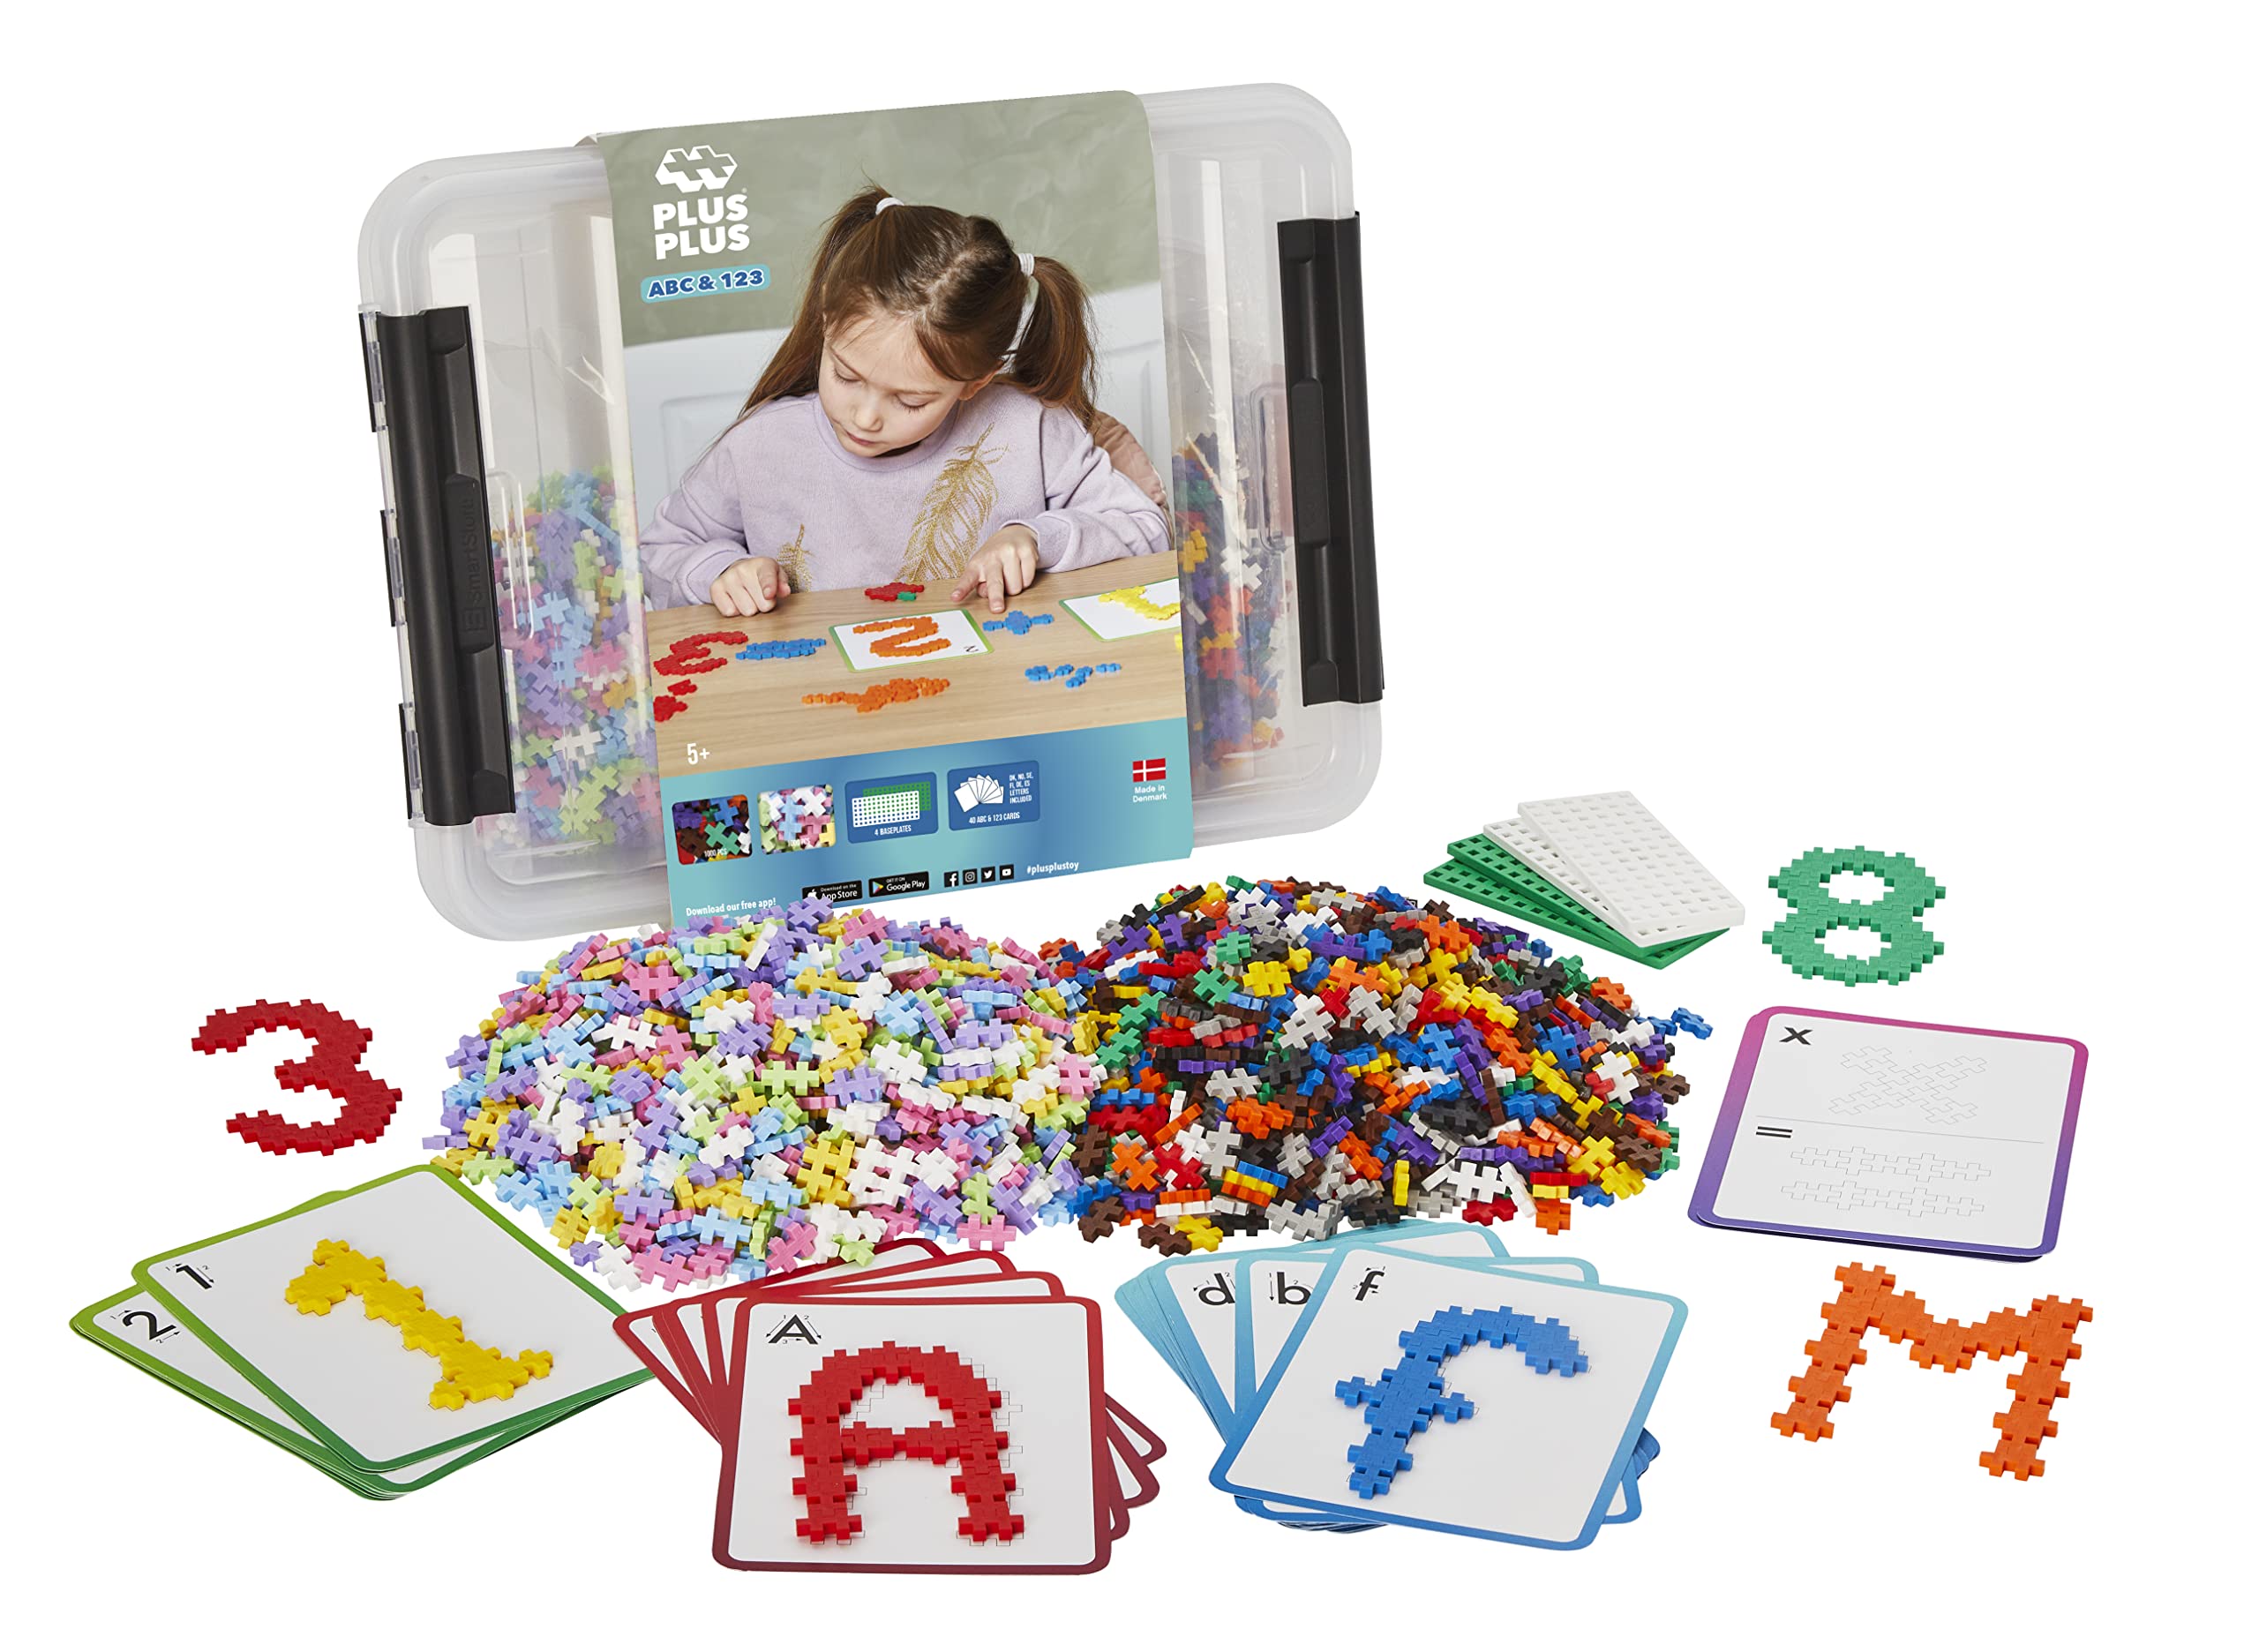 Plus-Plus - ABC & 123 Storage Box - 2000 pieces - Creative play, Building Blocks, Building, Development Toys for Kids, STEM, STEAM, Produced in Denmark